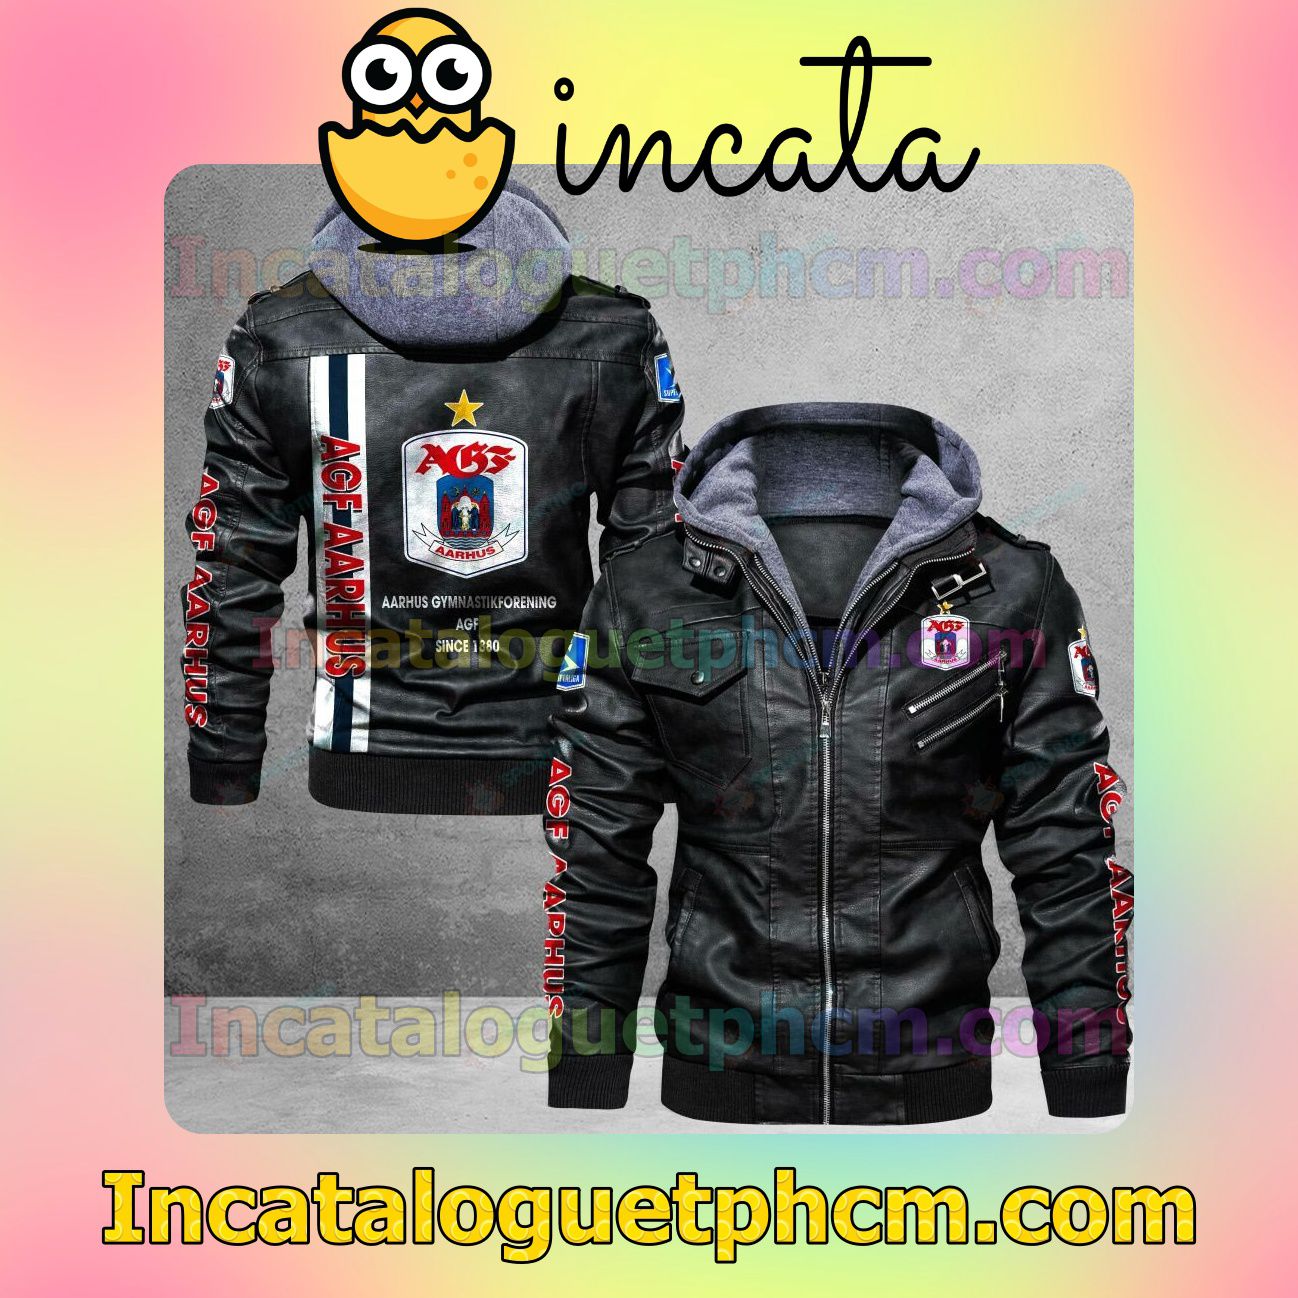 AGF Fodbold Brand Uniform Leather Jacket